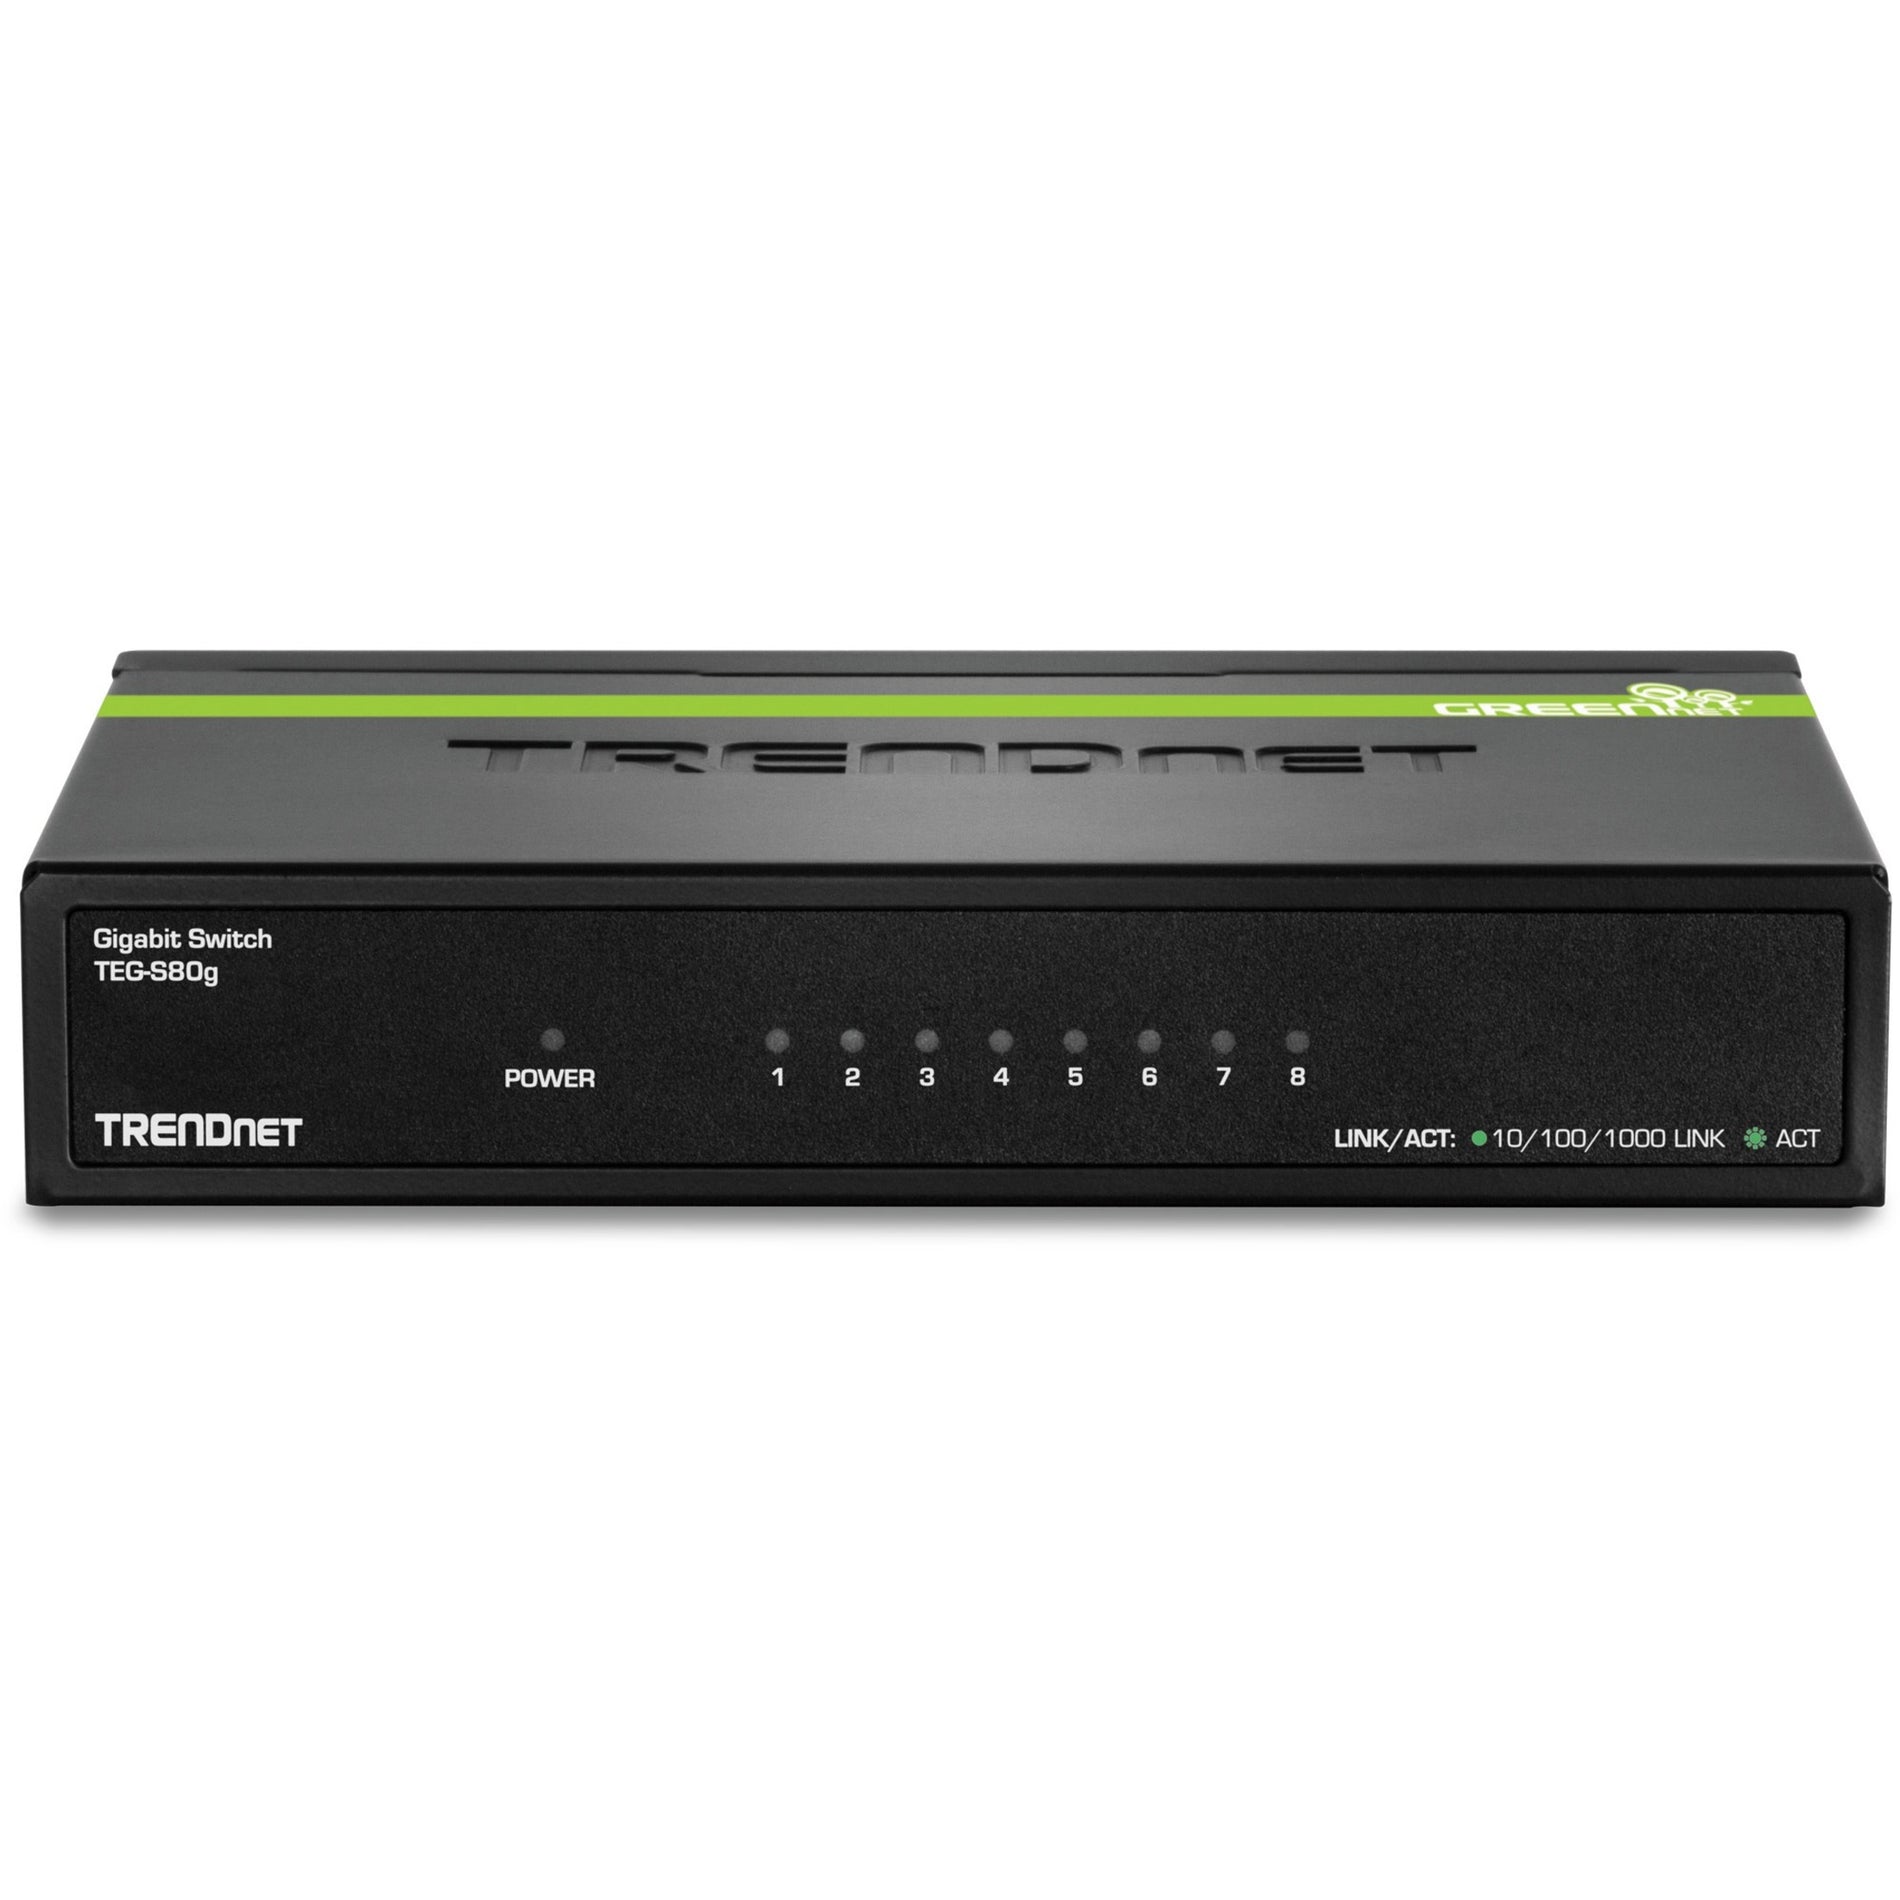 TRENDnet TEG-S80G 8-port Gigabit GREENnet Switch (Metal), Fanless, Plug & Play, Lifetime Protection